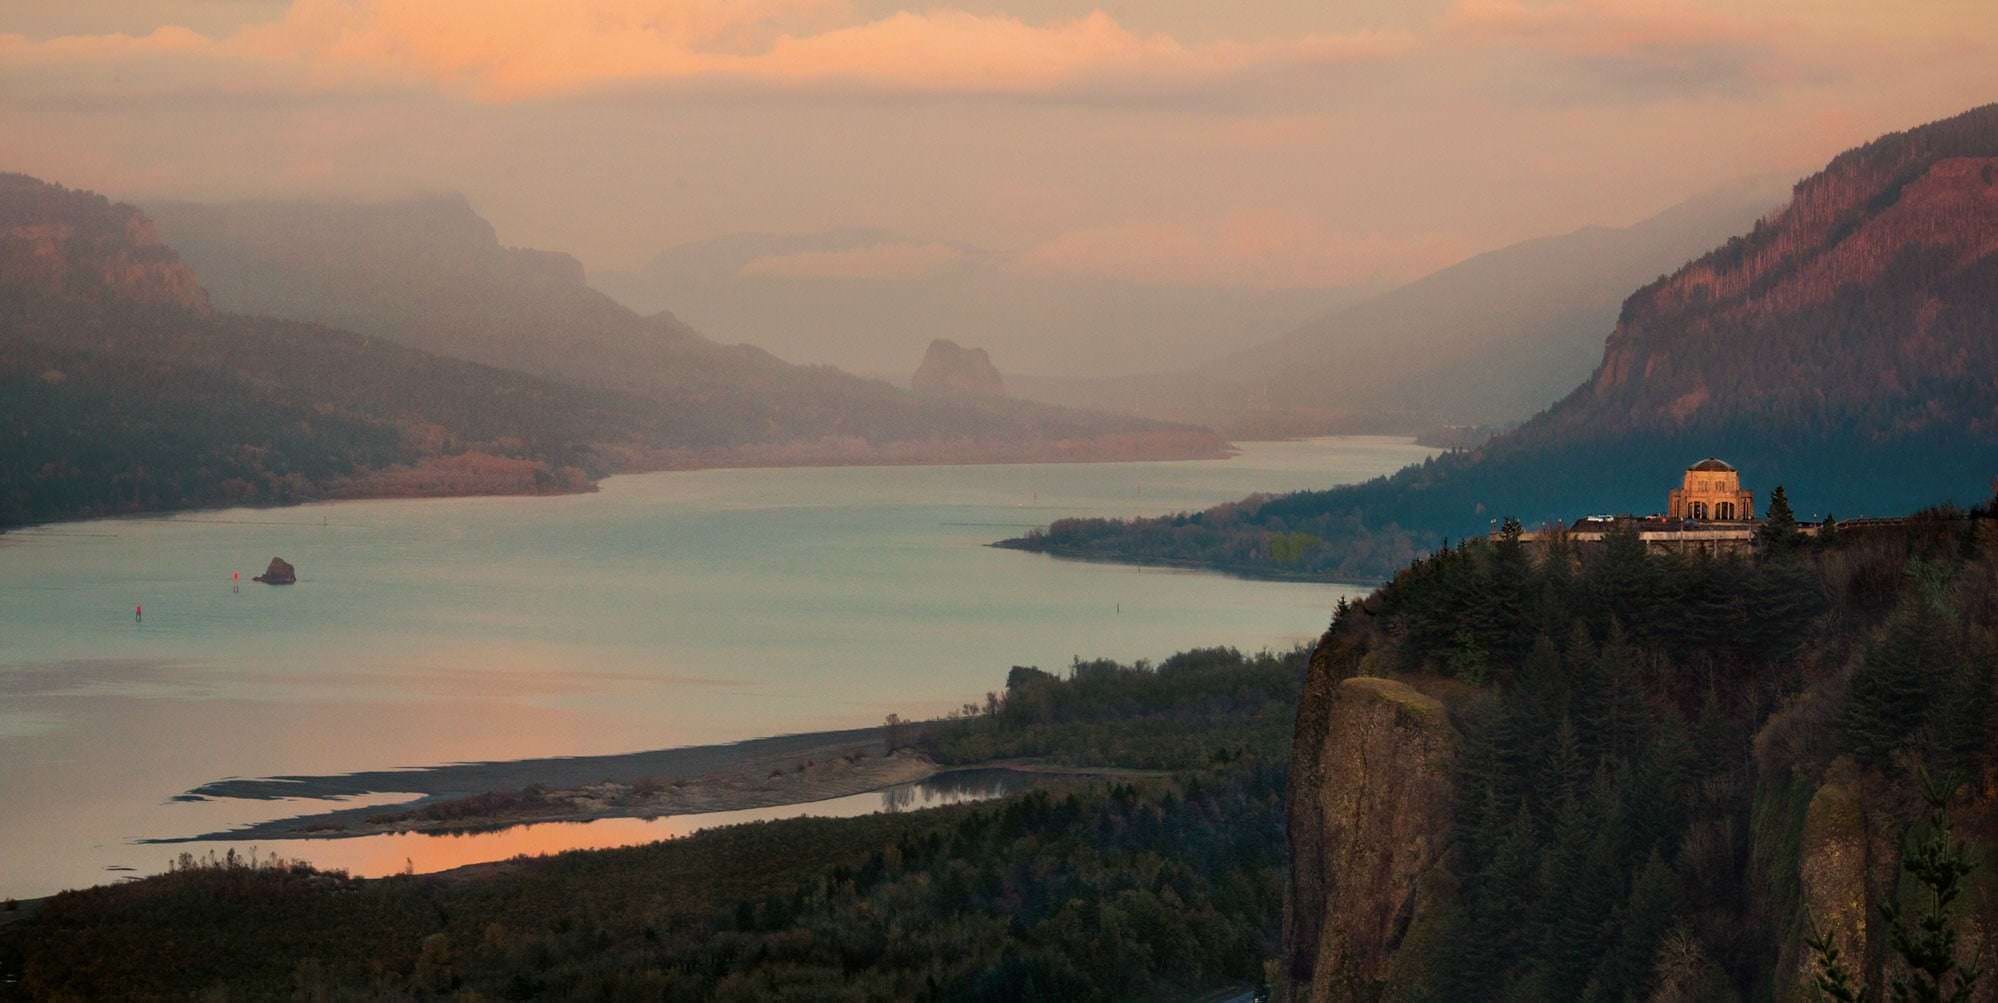 Explore the Columbia River Gorge